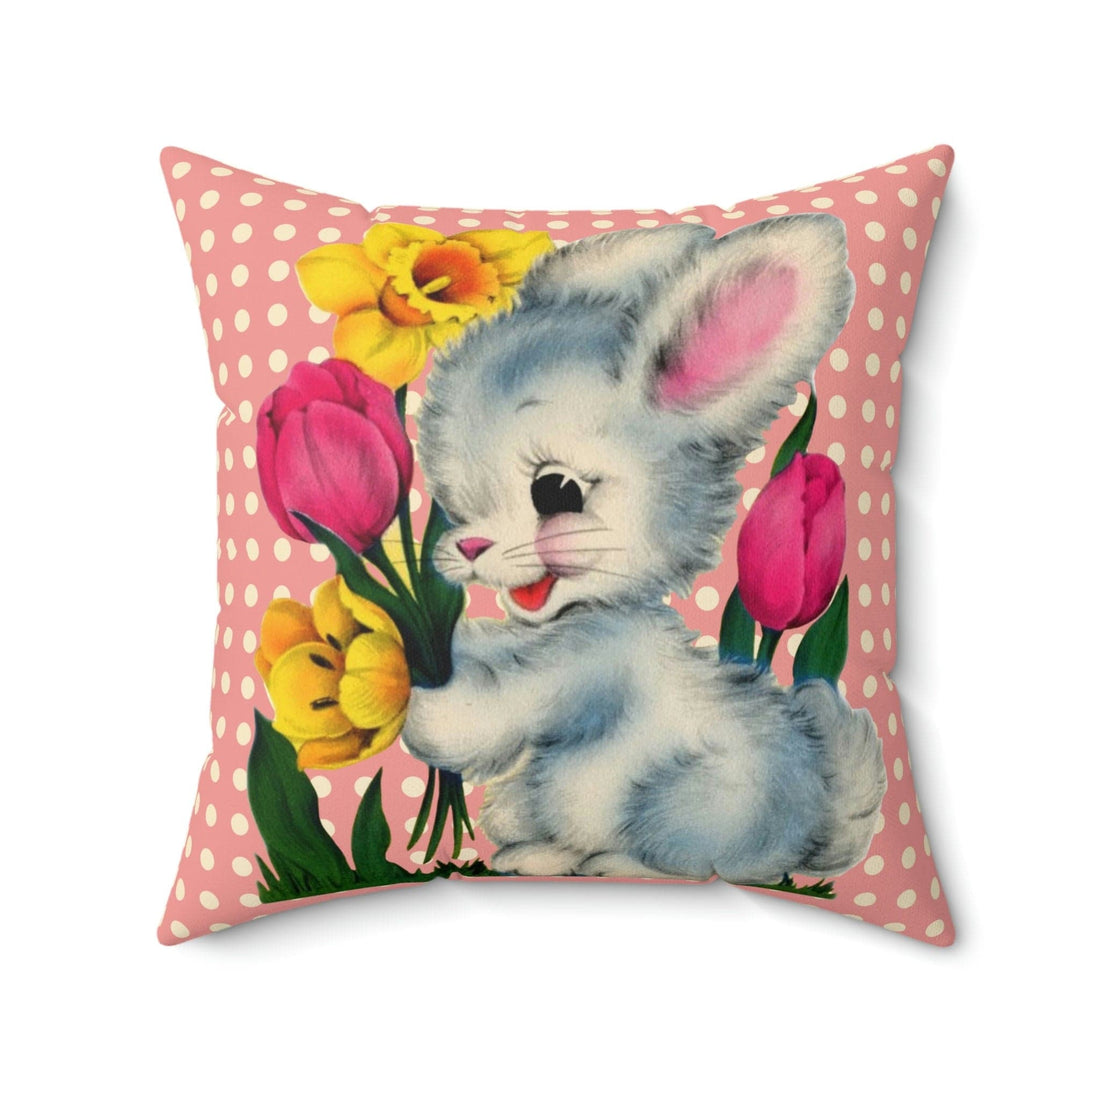 Kate McEnroe New York Vintage Kitschy Easter Bunny Throw Pillow CoverThrow Pillow Covers41995972384064259307